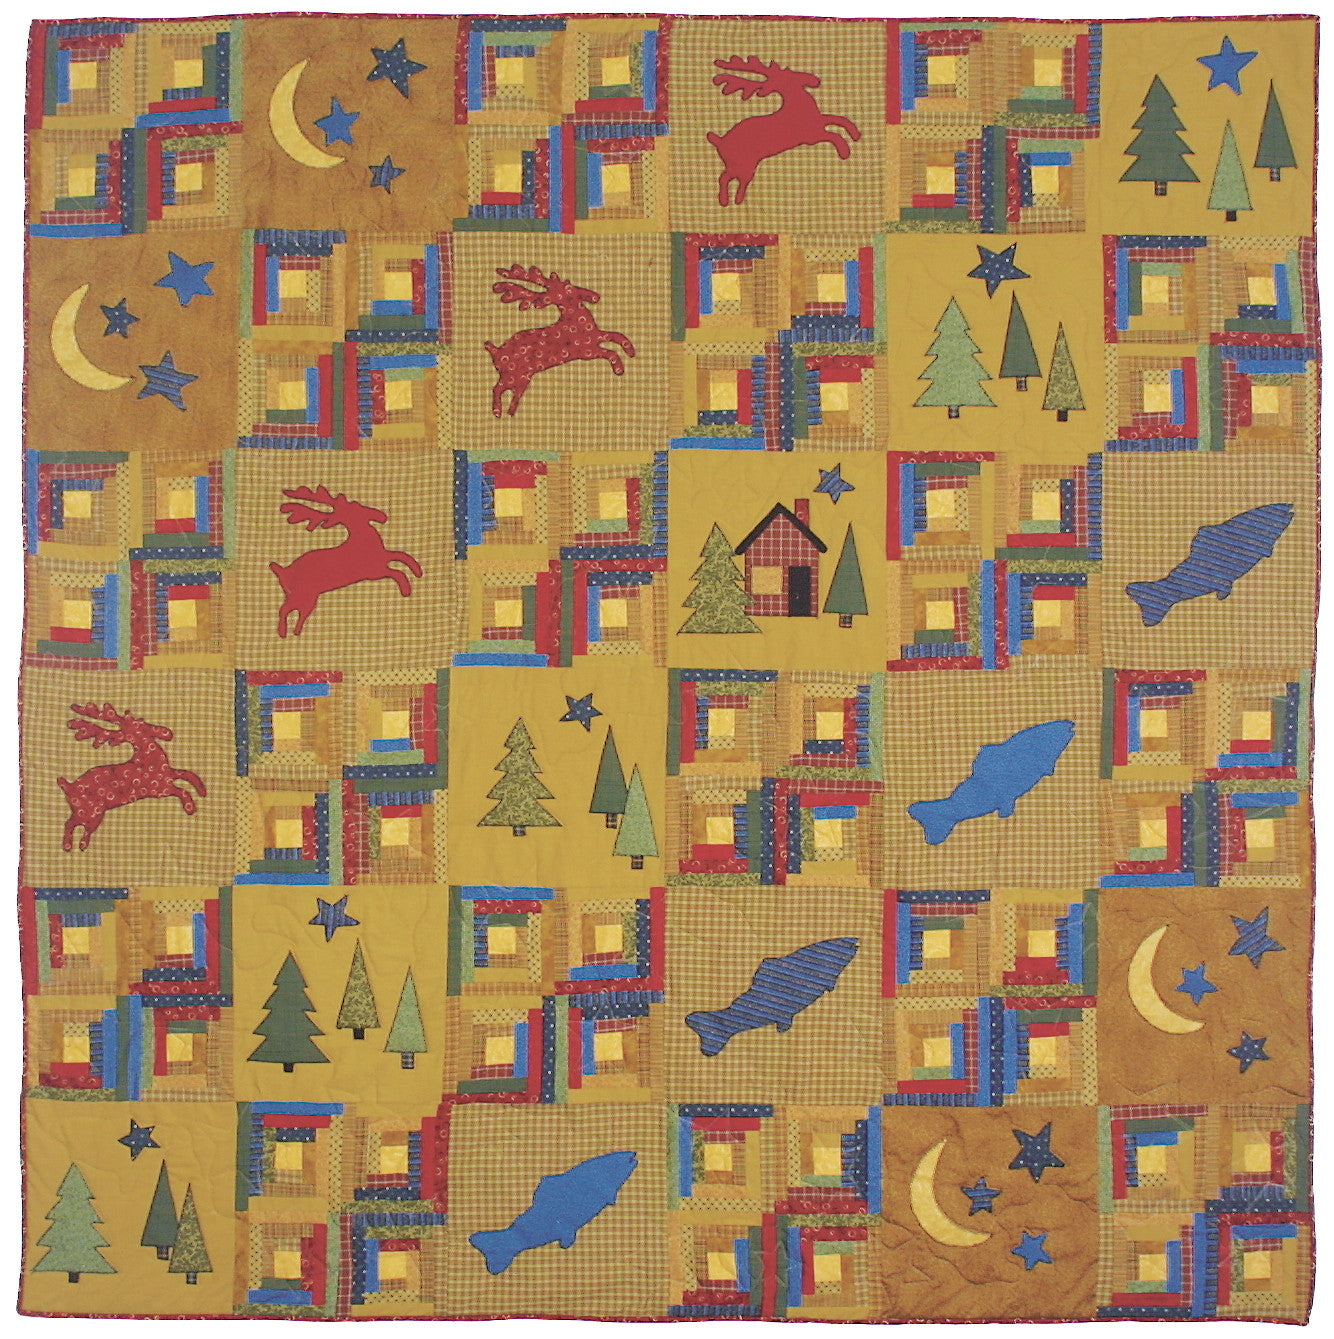 Lodge Quilts Stitchin Post Trifold Pattern